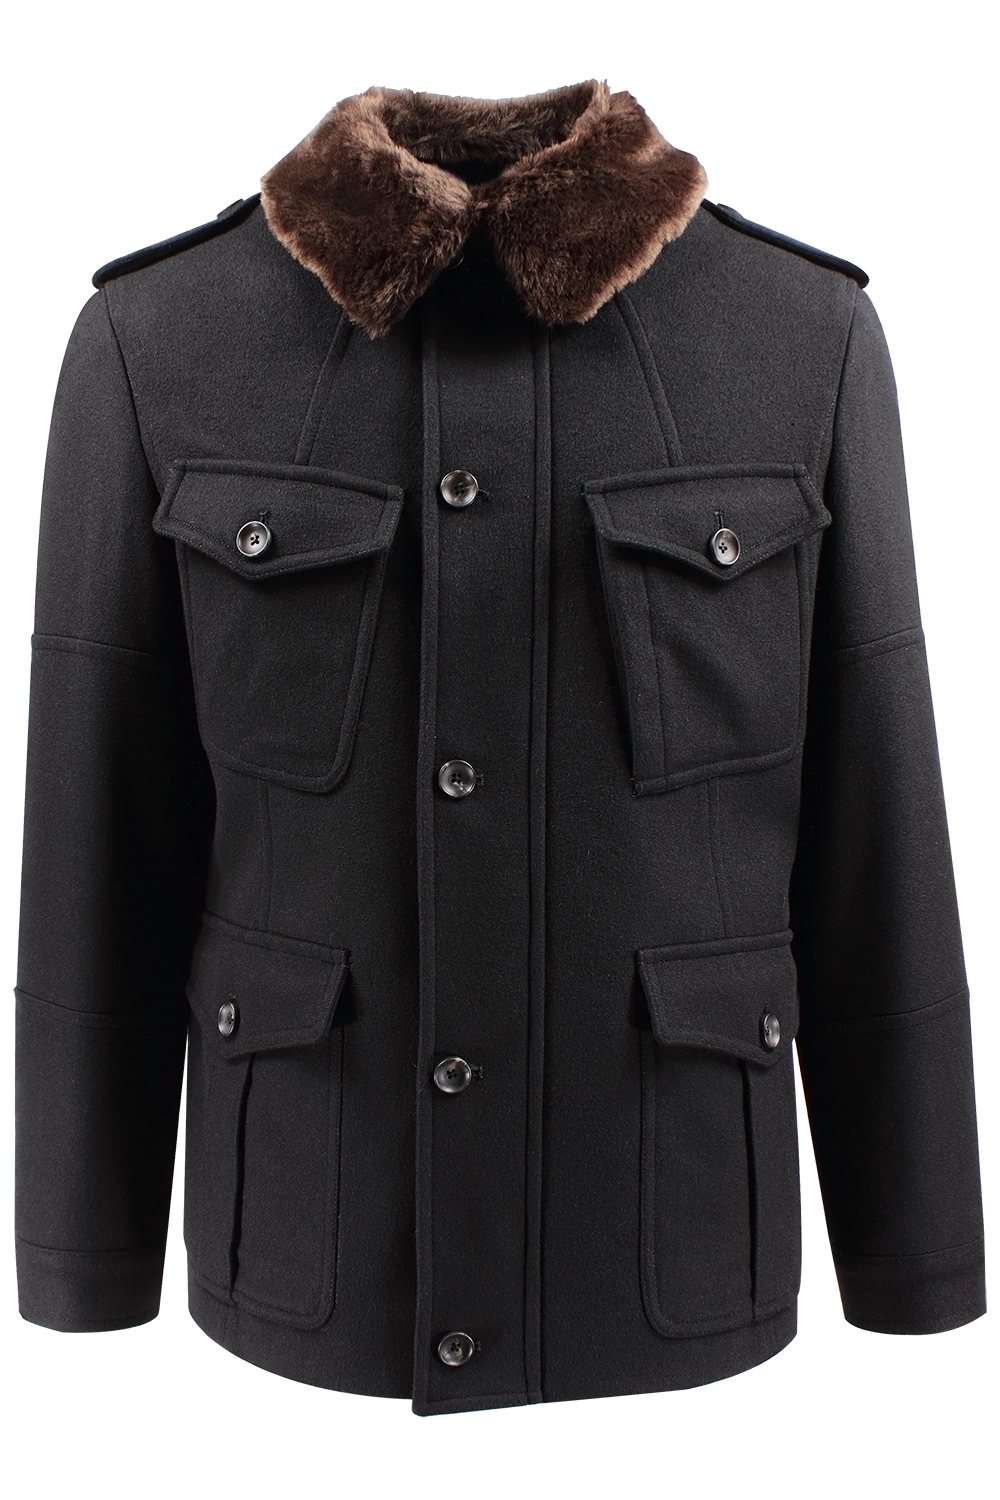 Field jacket lana nera collo ecopelliccia